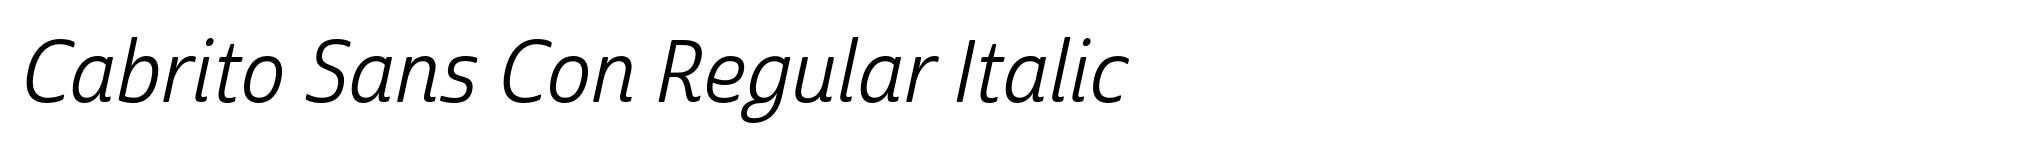 Cabrito Sans Con Regular Italic image